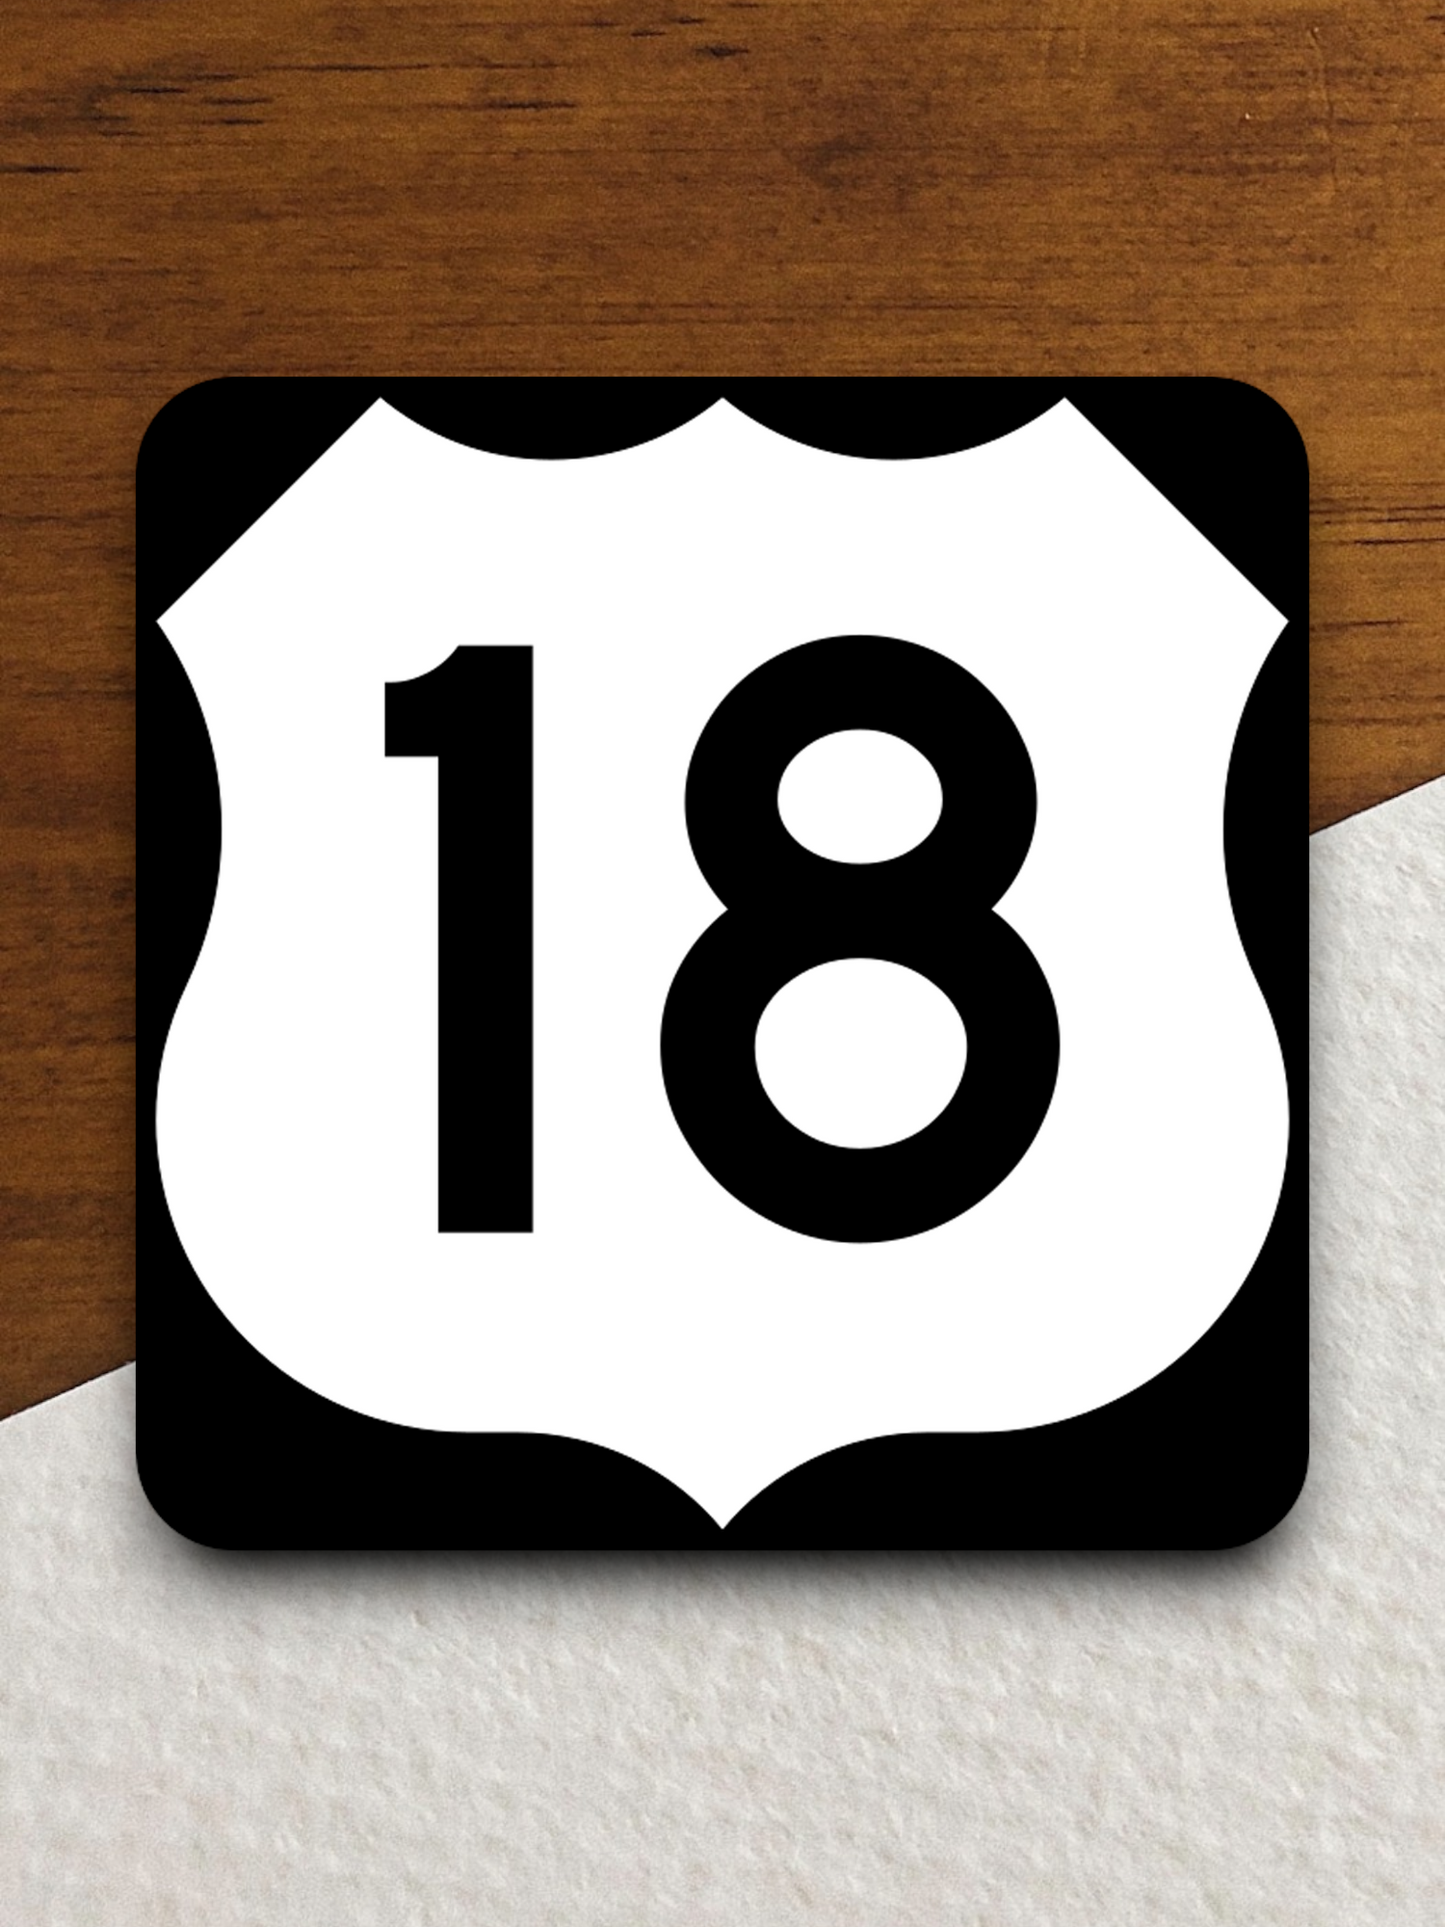 U.S. Route 18 Road Sign Sticker